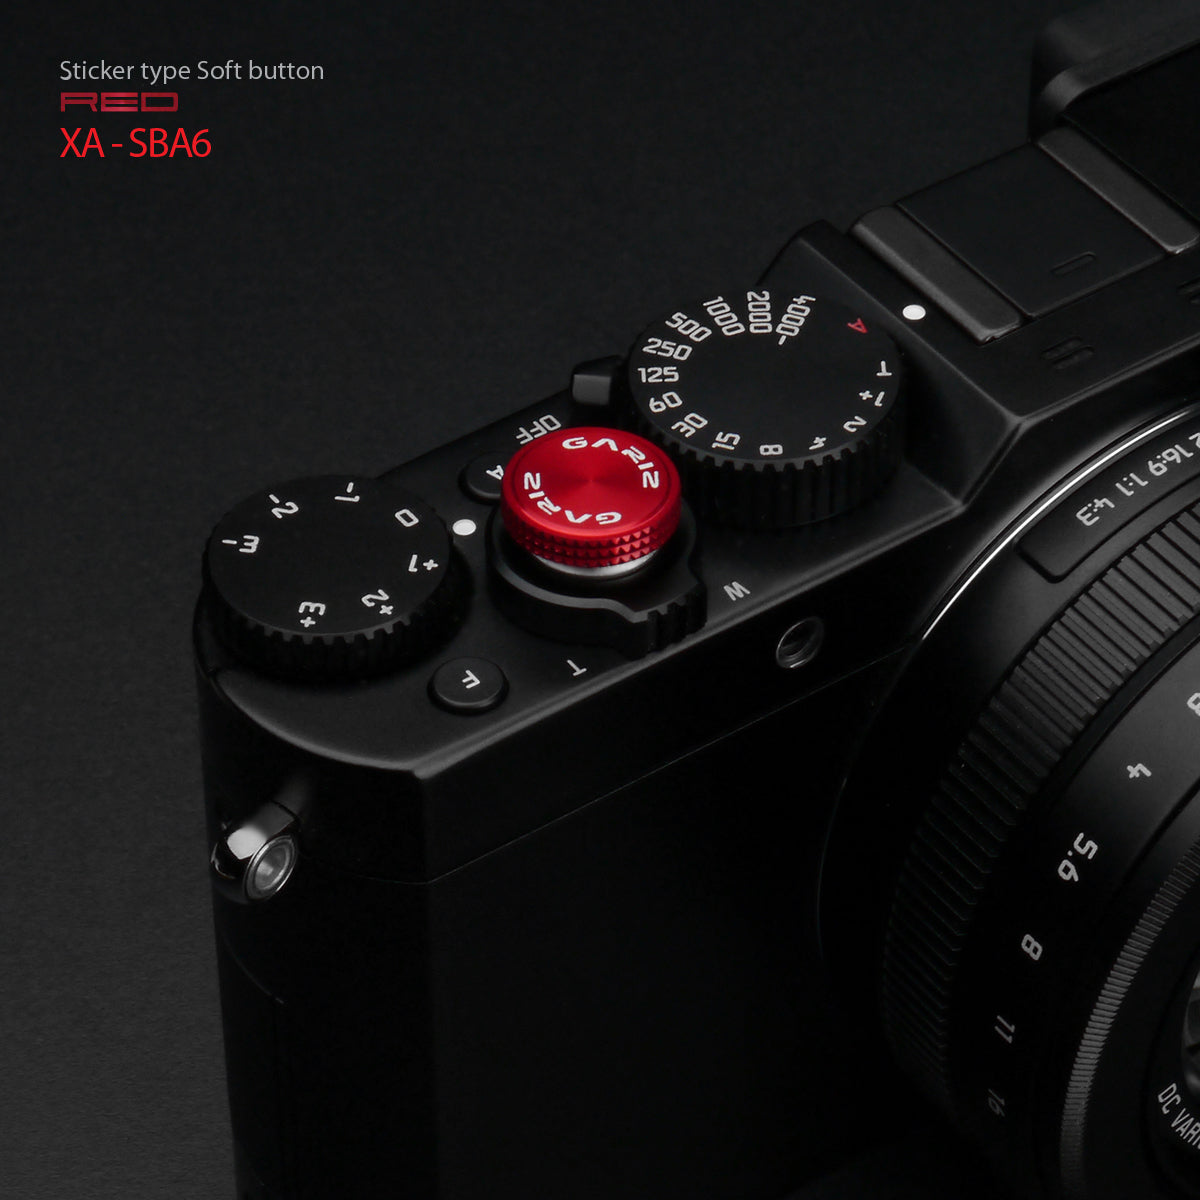 Gariz Sticker Type Soft Button Red XA-SBA6 for Sony Alpha Leica FUJI OM-D LUMIX